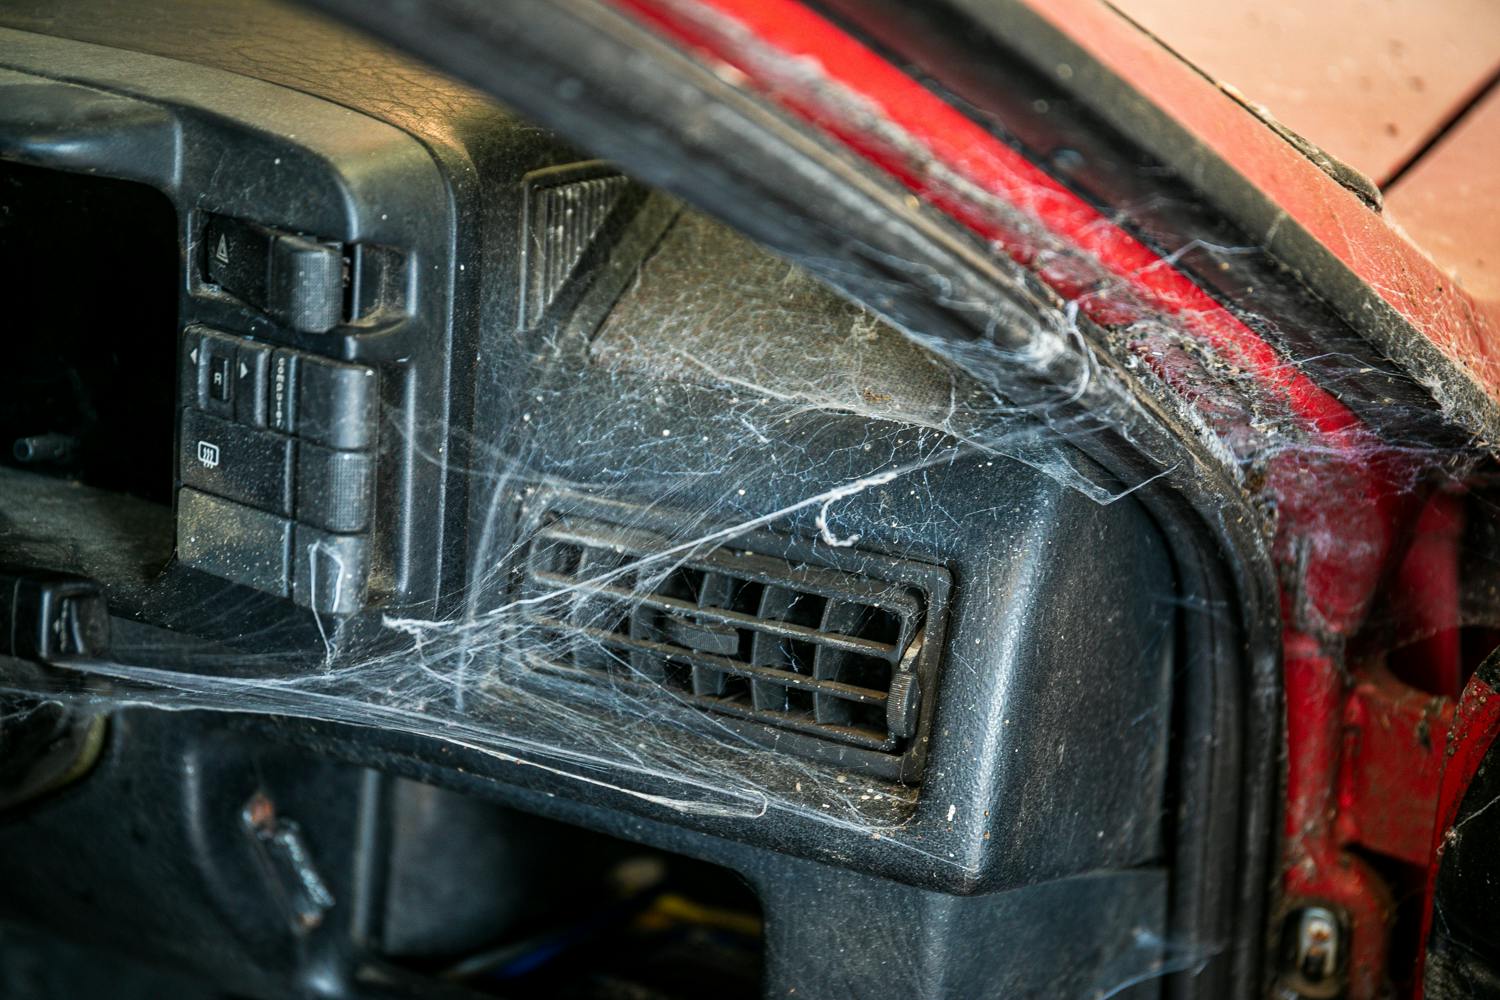 Audi Quattro barn find vent spider cobweb detail